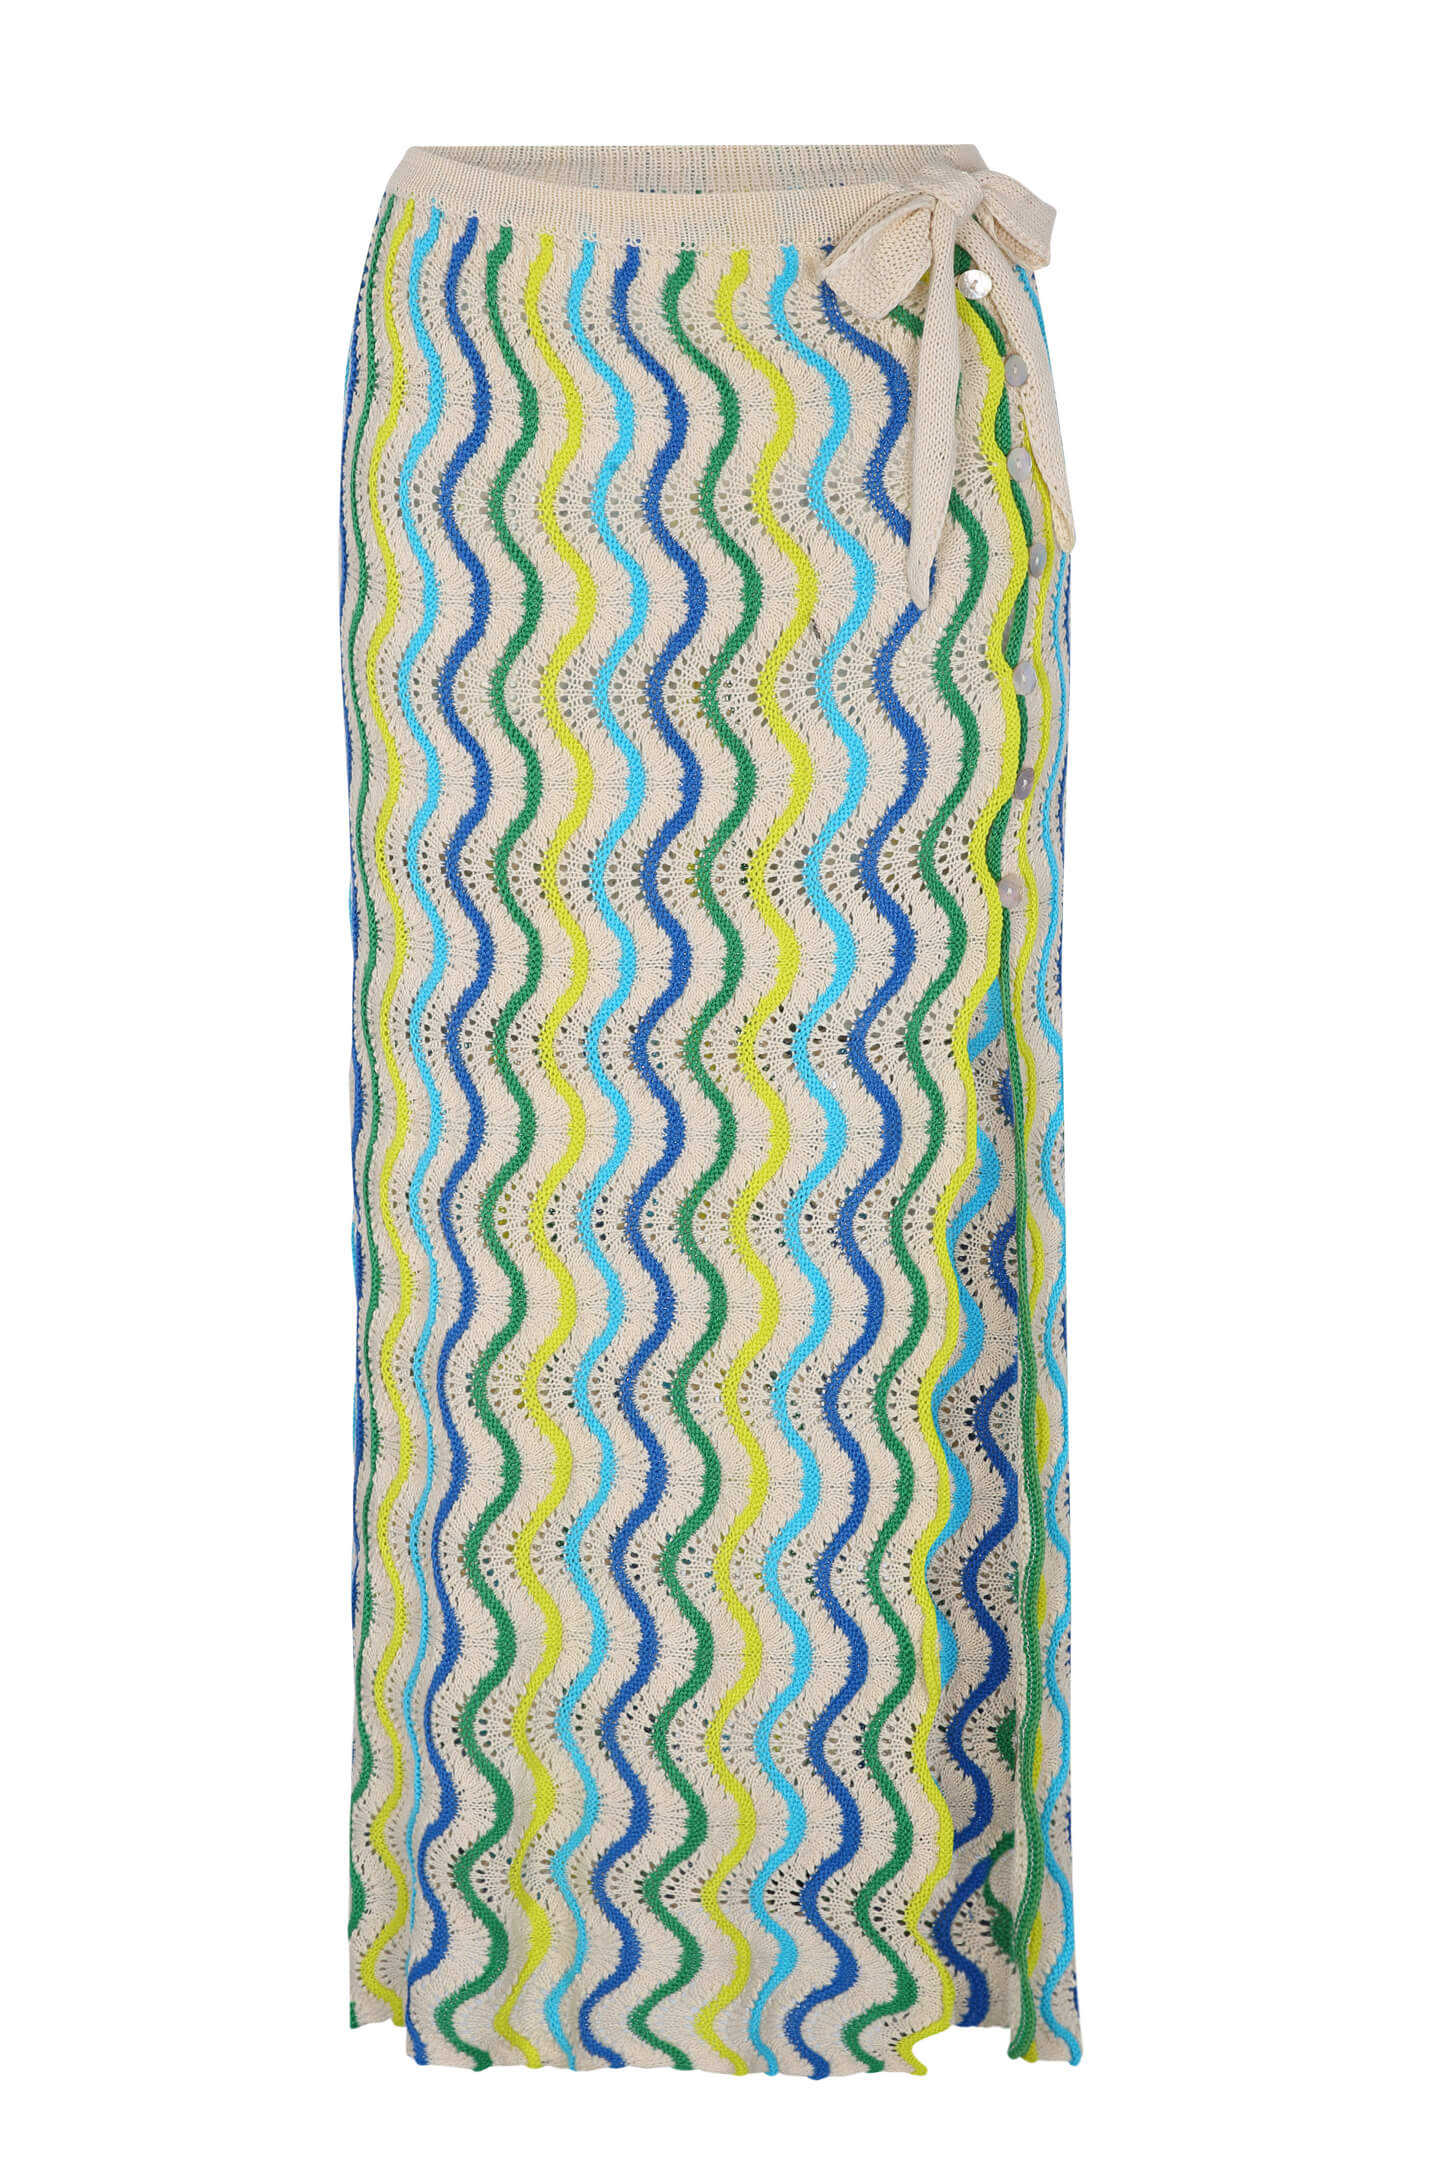 Capittana Jade knitted skirt in multicolor